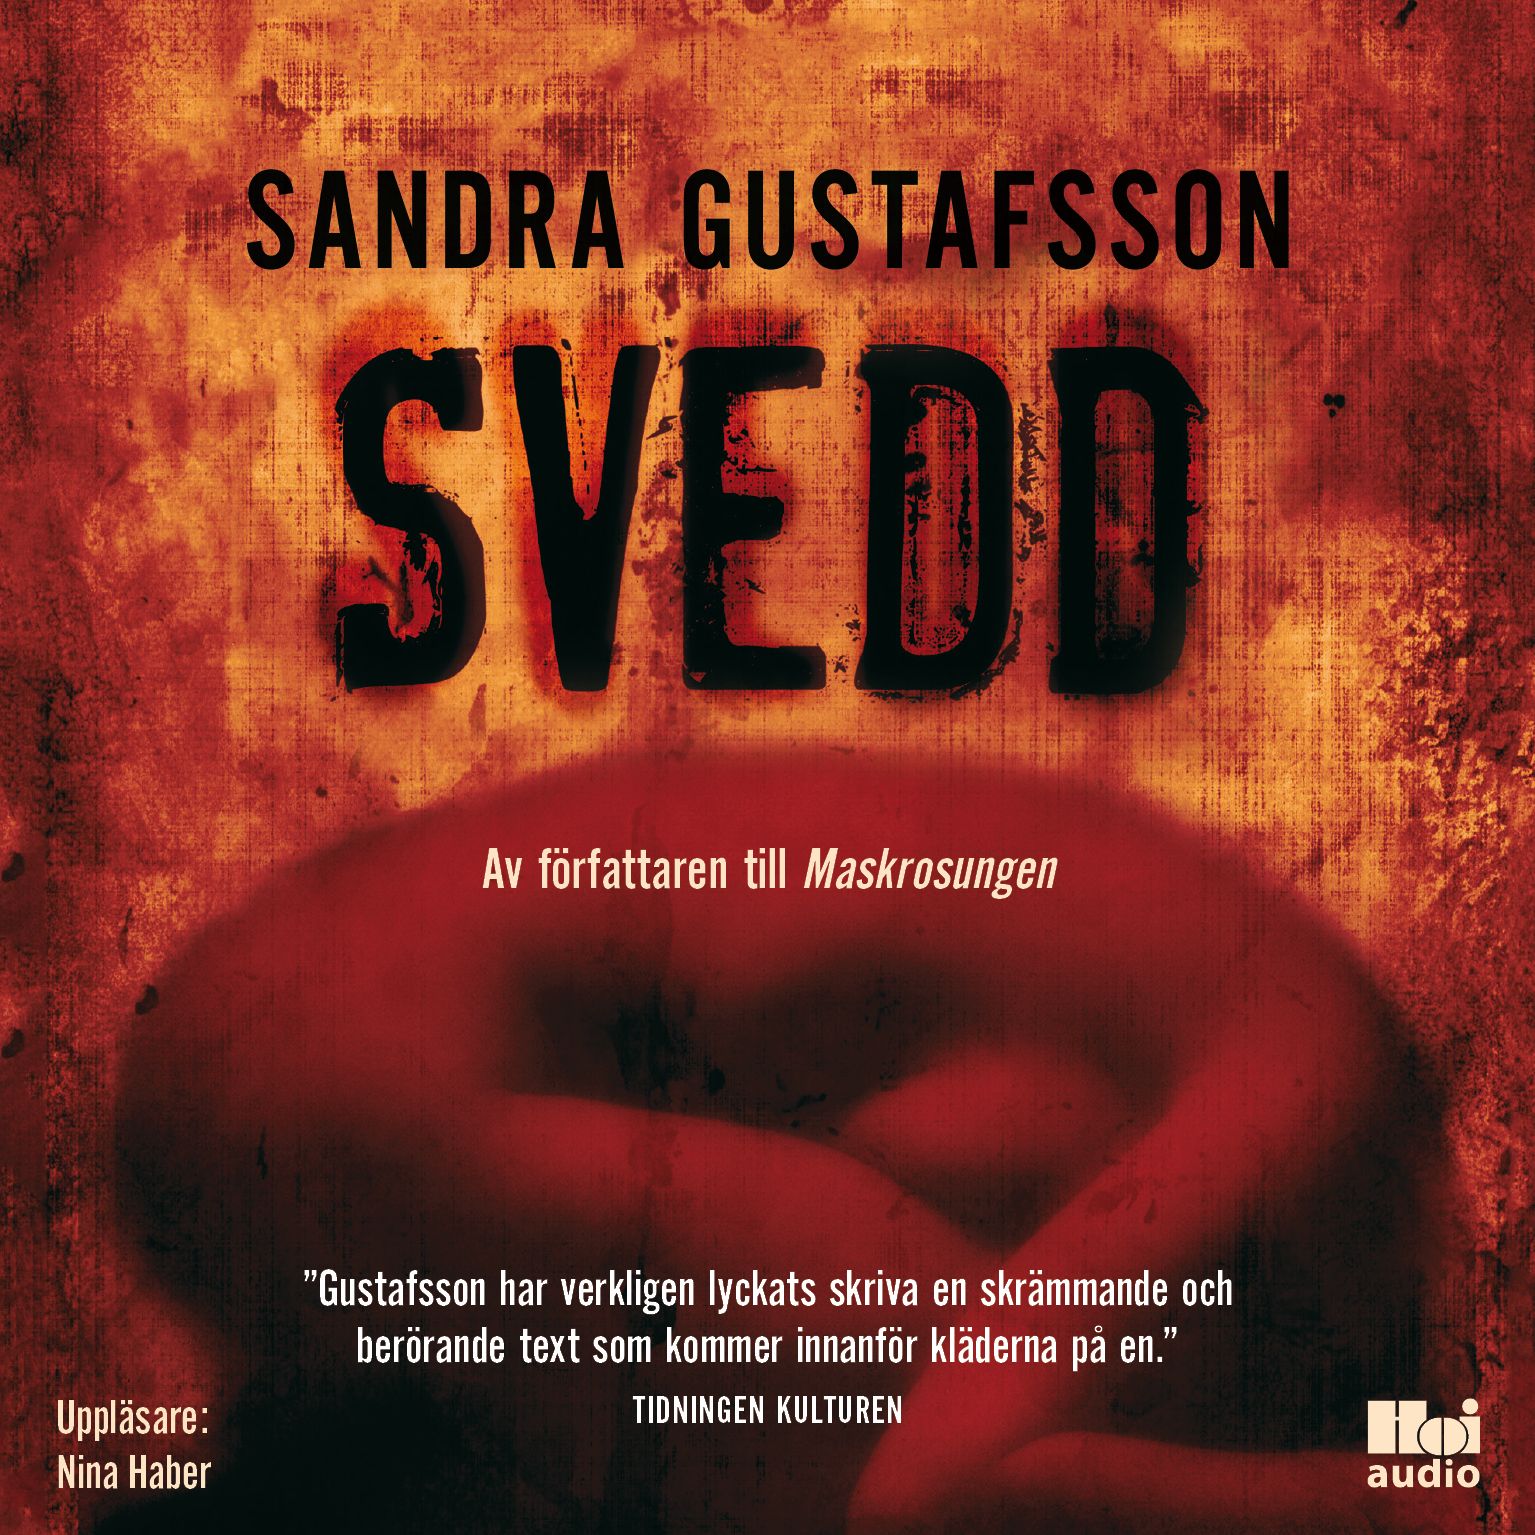 Svedd, audiobook by Sandra Gustafsson